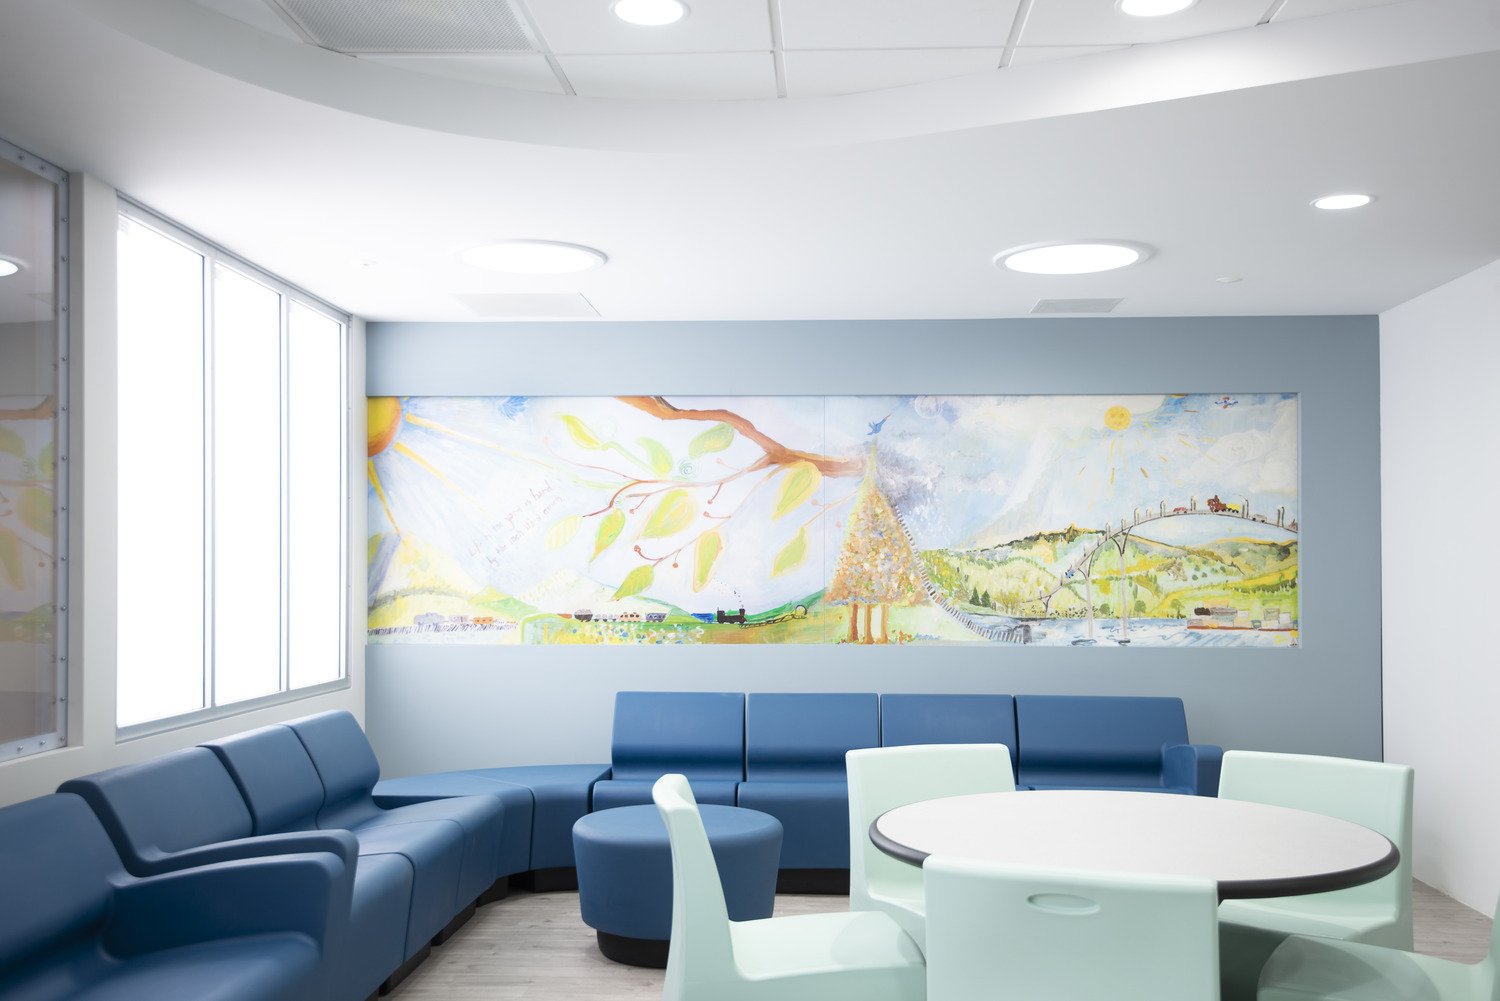 Raritan Bay Medical Center Behavioral Health Unit Expansion